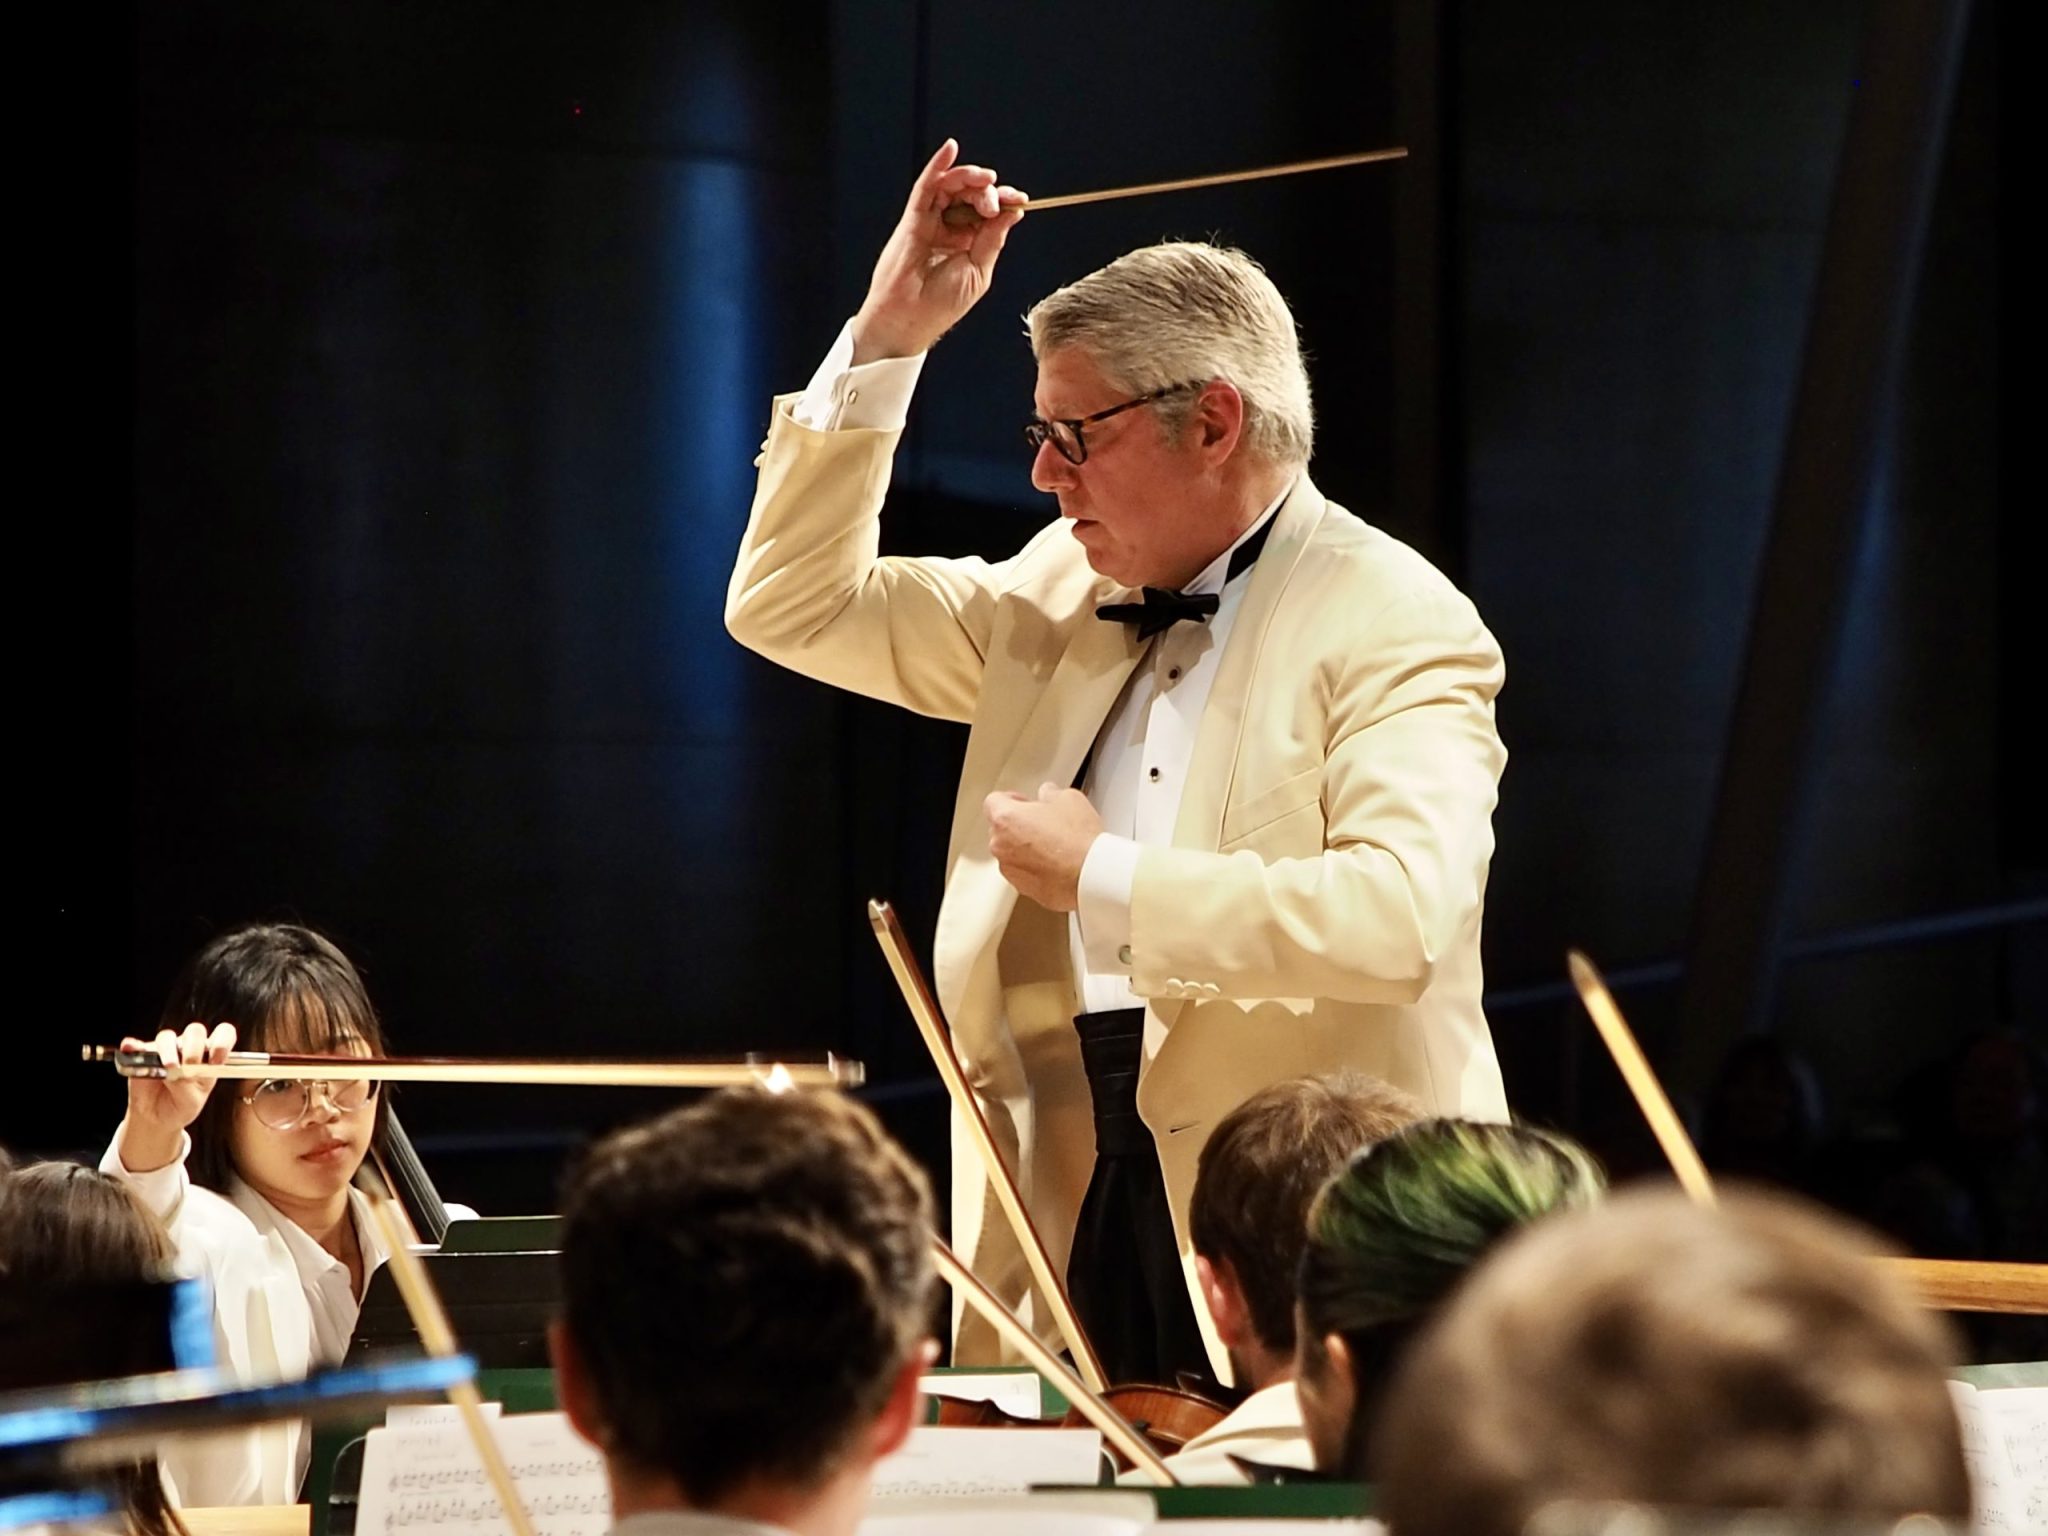 NRO Pivots to New Saturday Concert Showcasing Viennese Classics